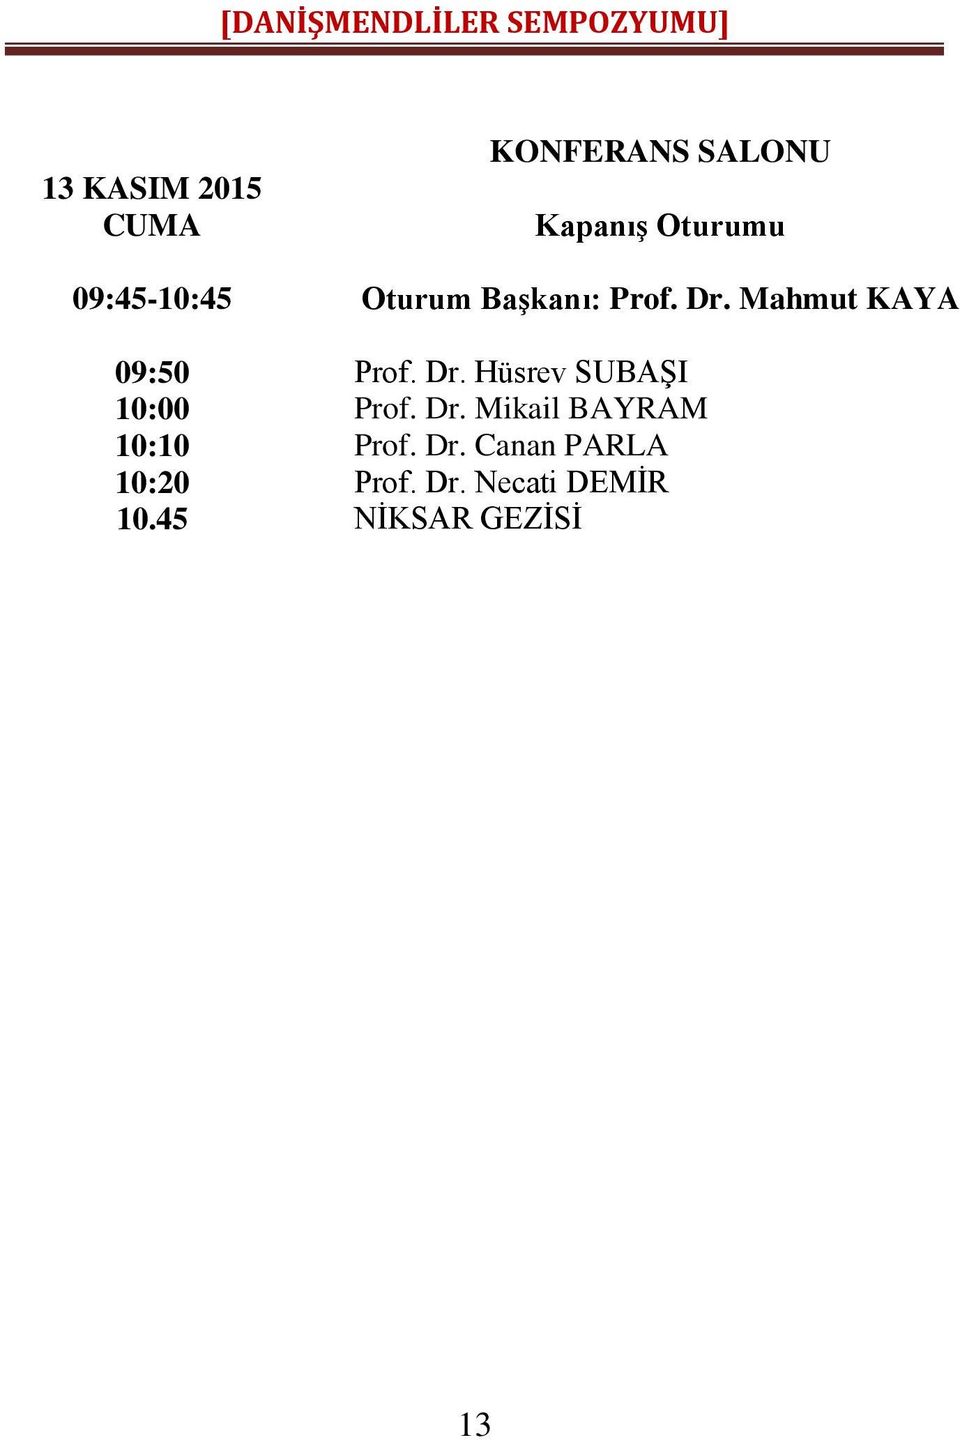 Mahmut KAYA 09:50 Prof. Dr. Hüsrev SUBAŞI 10:00 Prof. Dr. Mikail BAYRAM 10:10 10:20 Prof.